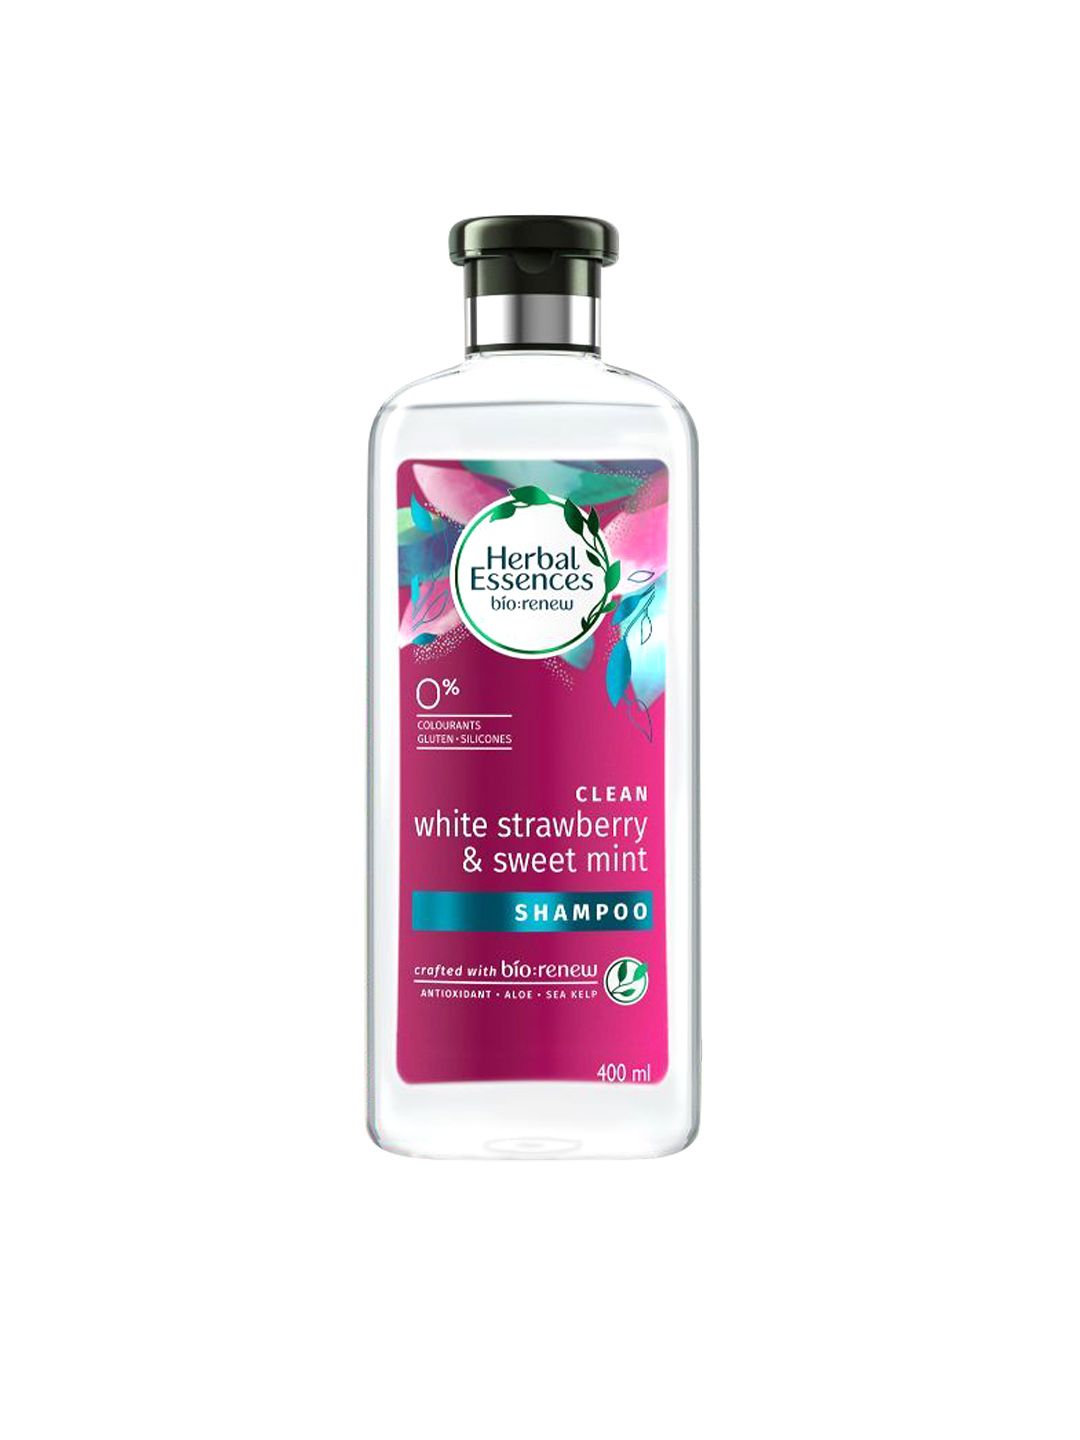 Herbal Essences Bio Renew Unisex Clean White Strawberry & Sweet Mint Shampoo 400 ml Price in India